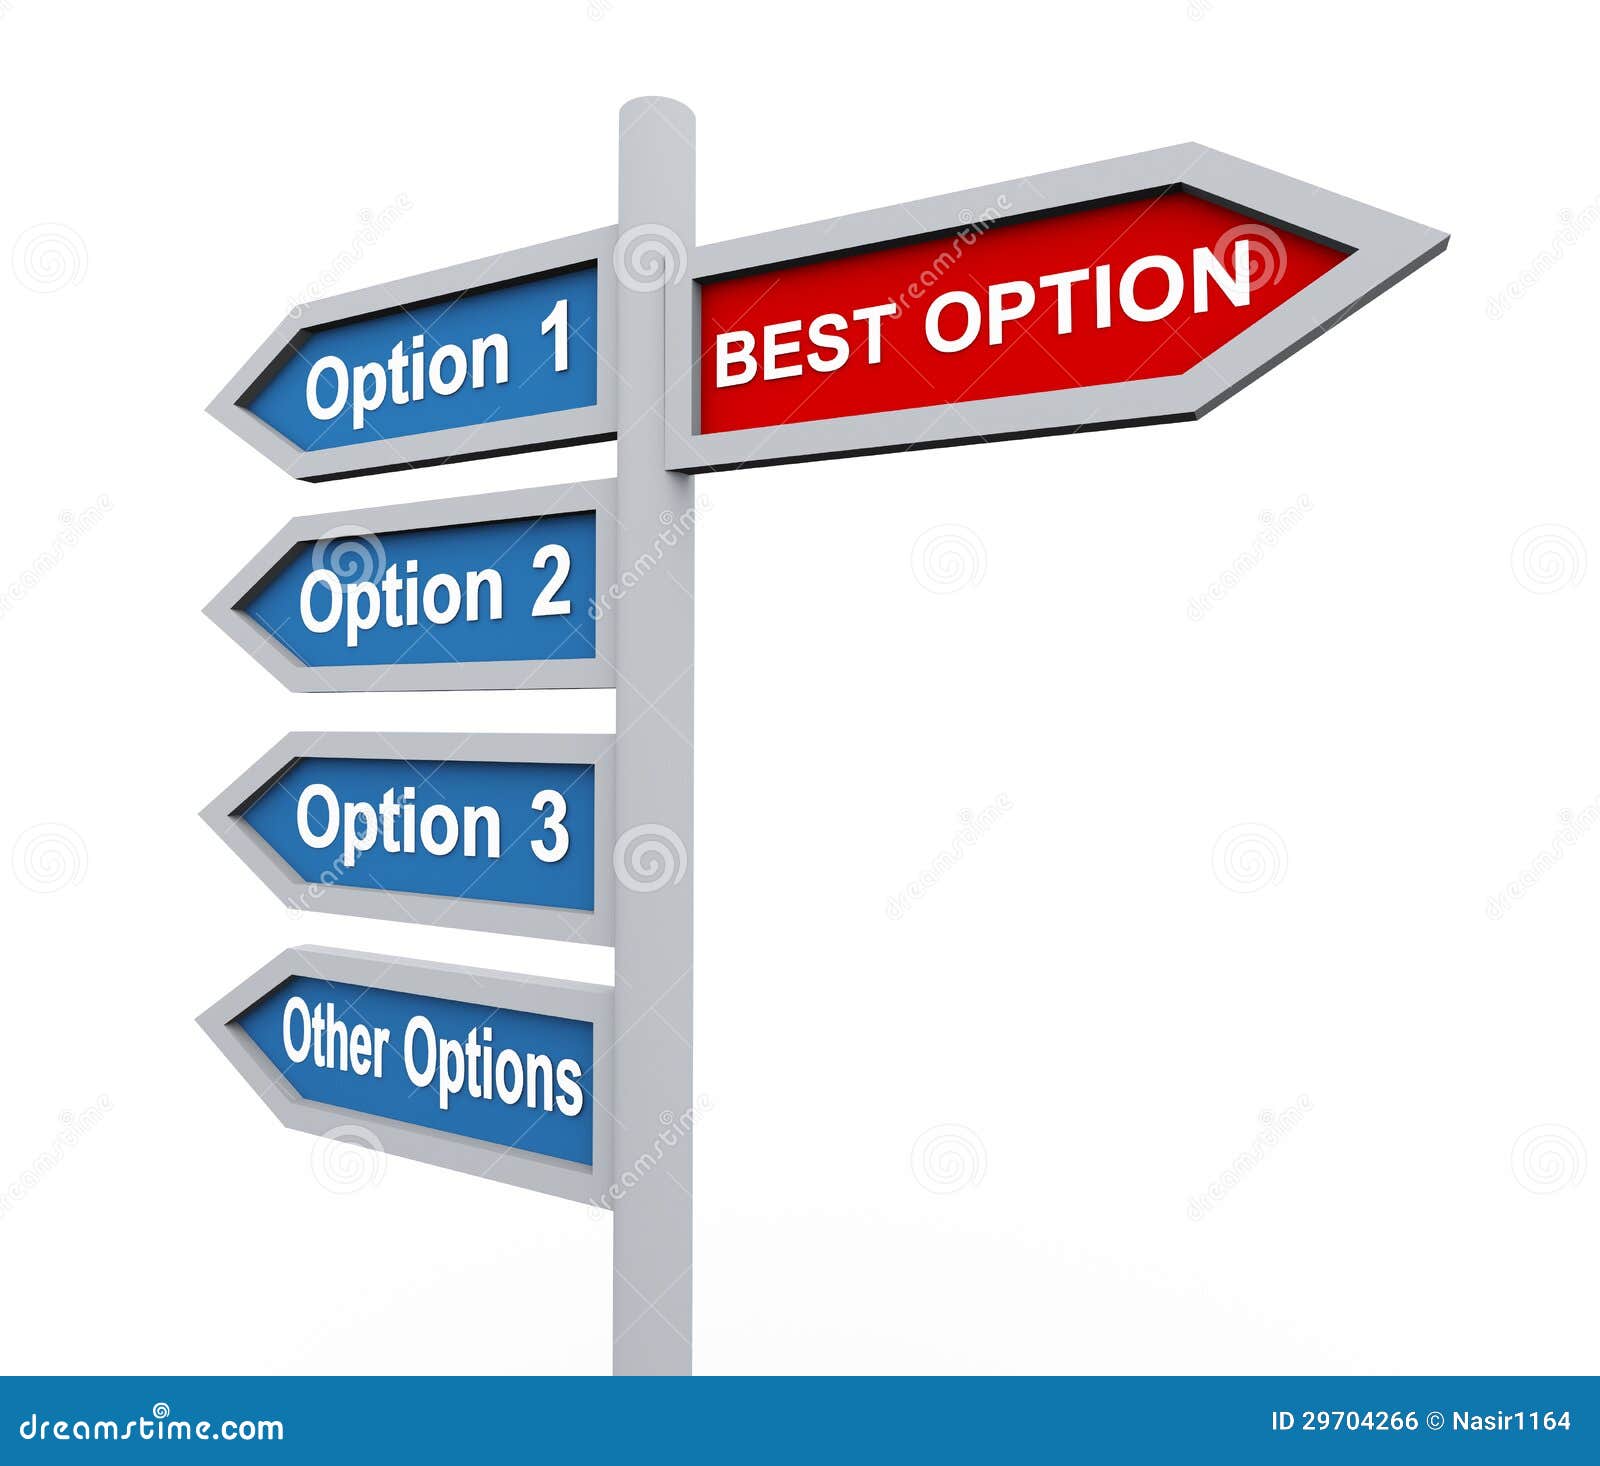 C choose the best option